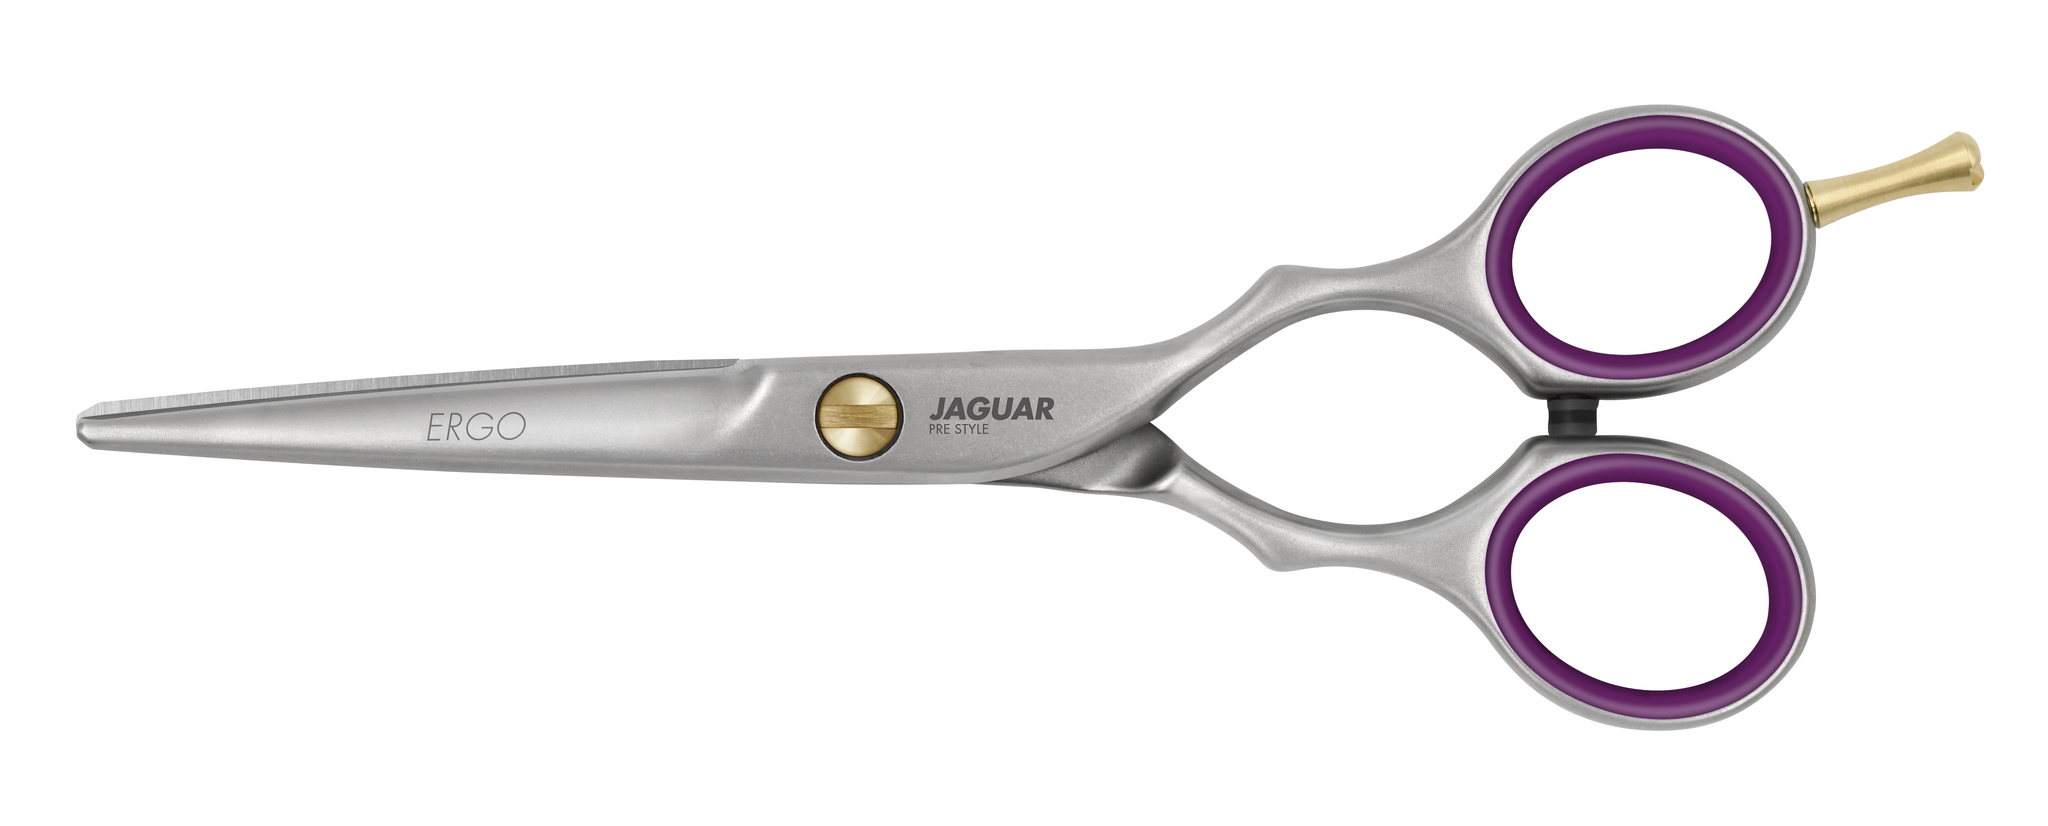 Jaguar ERGO Scissors Set "The Stage Is Yours"